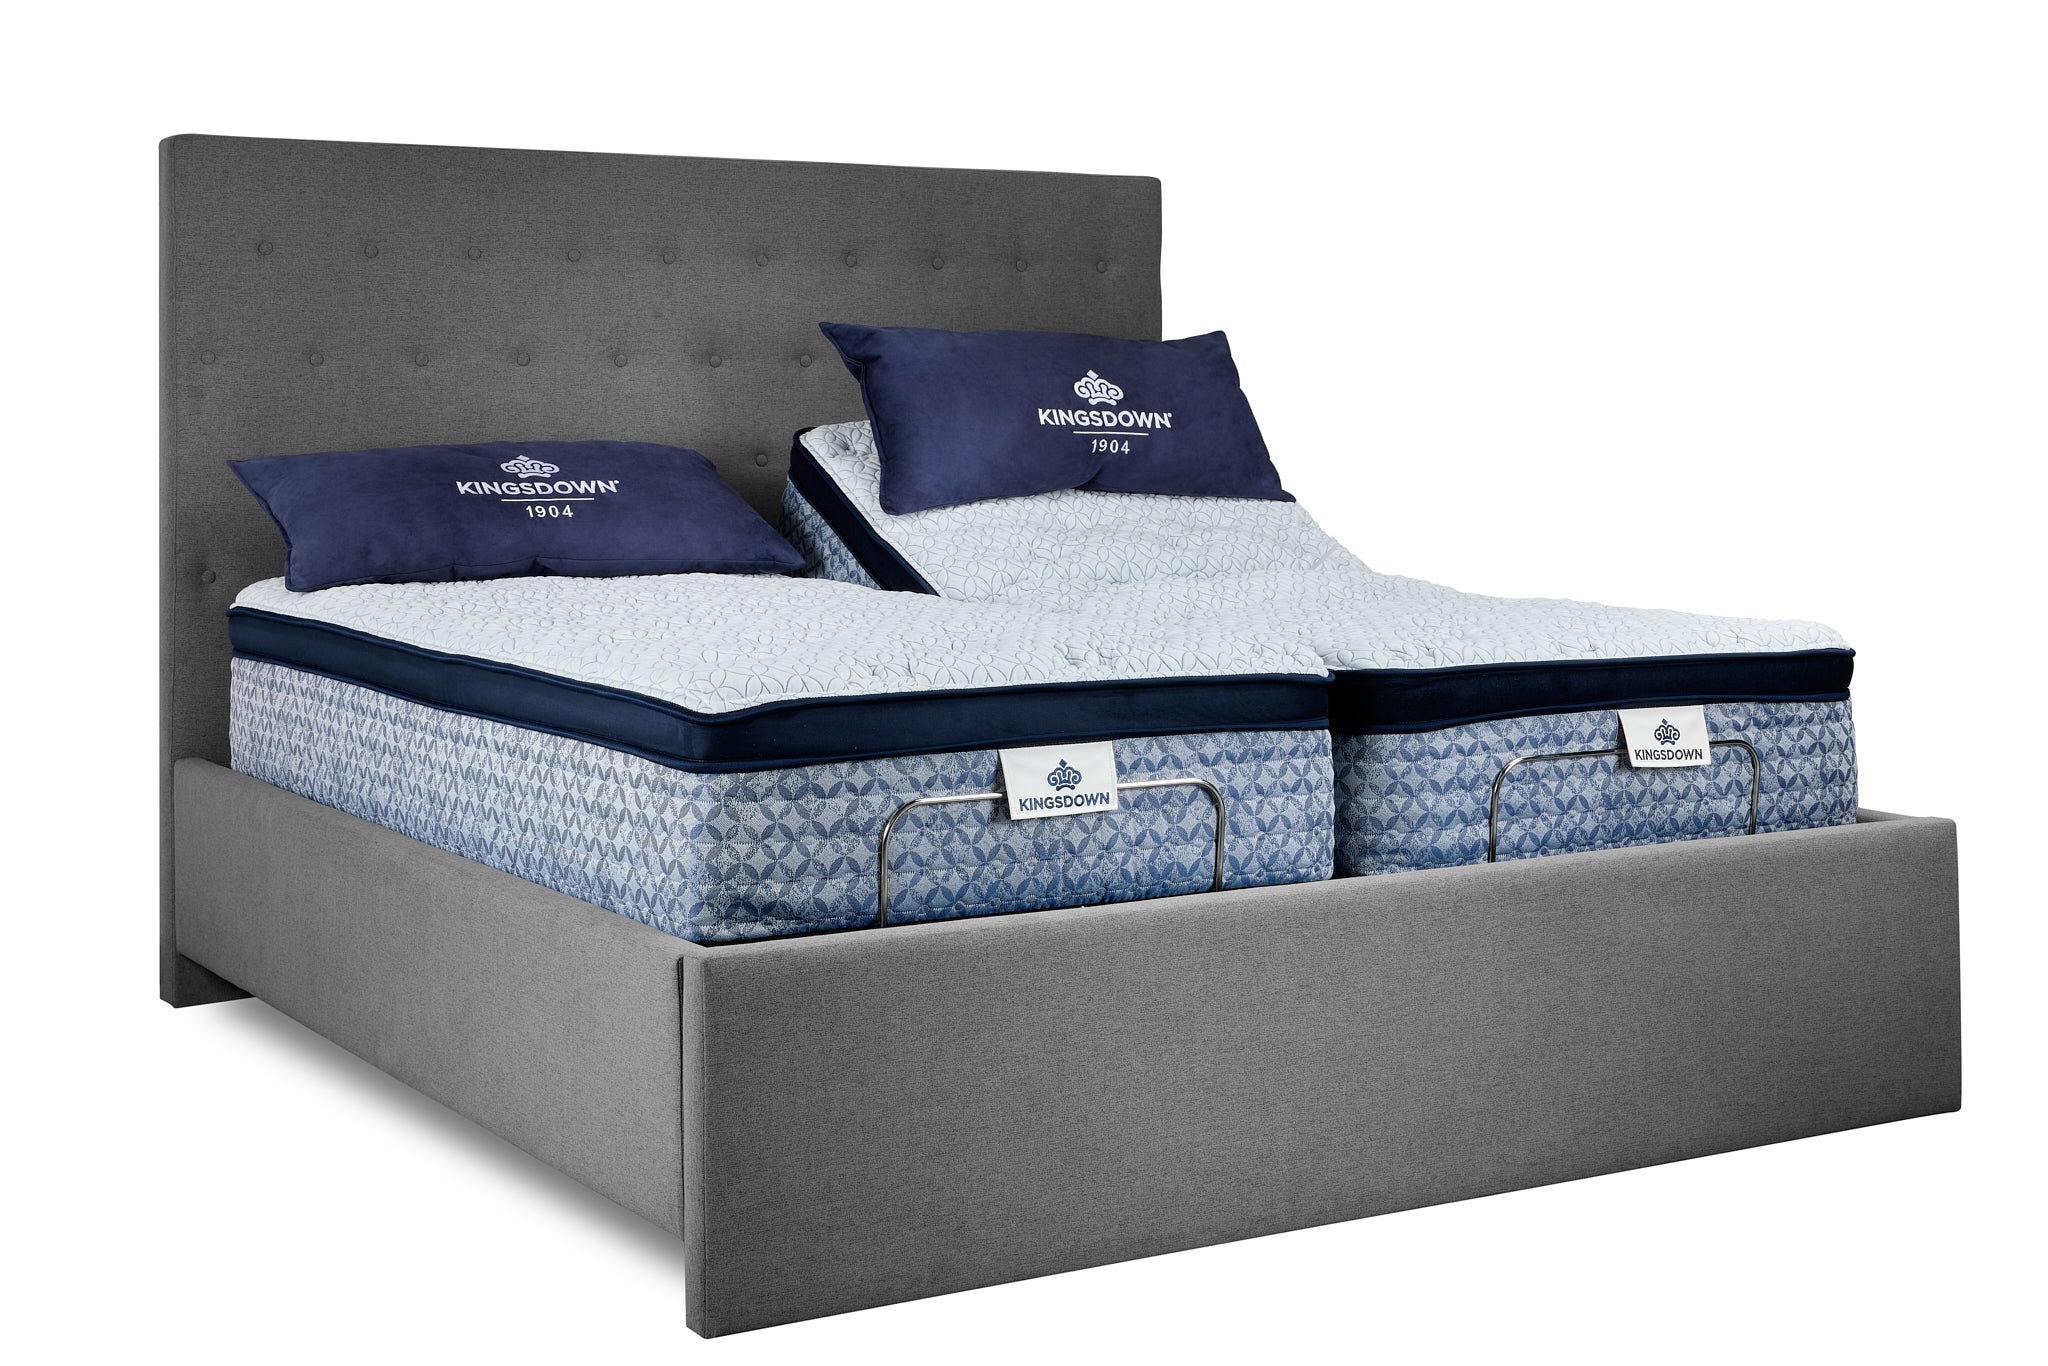 Demo Kingsdown Baroness Split King Adjustable Bed